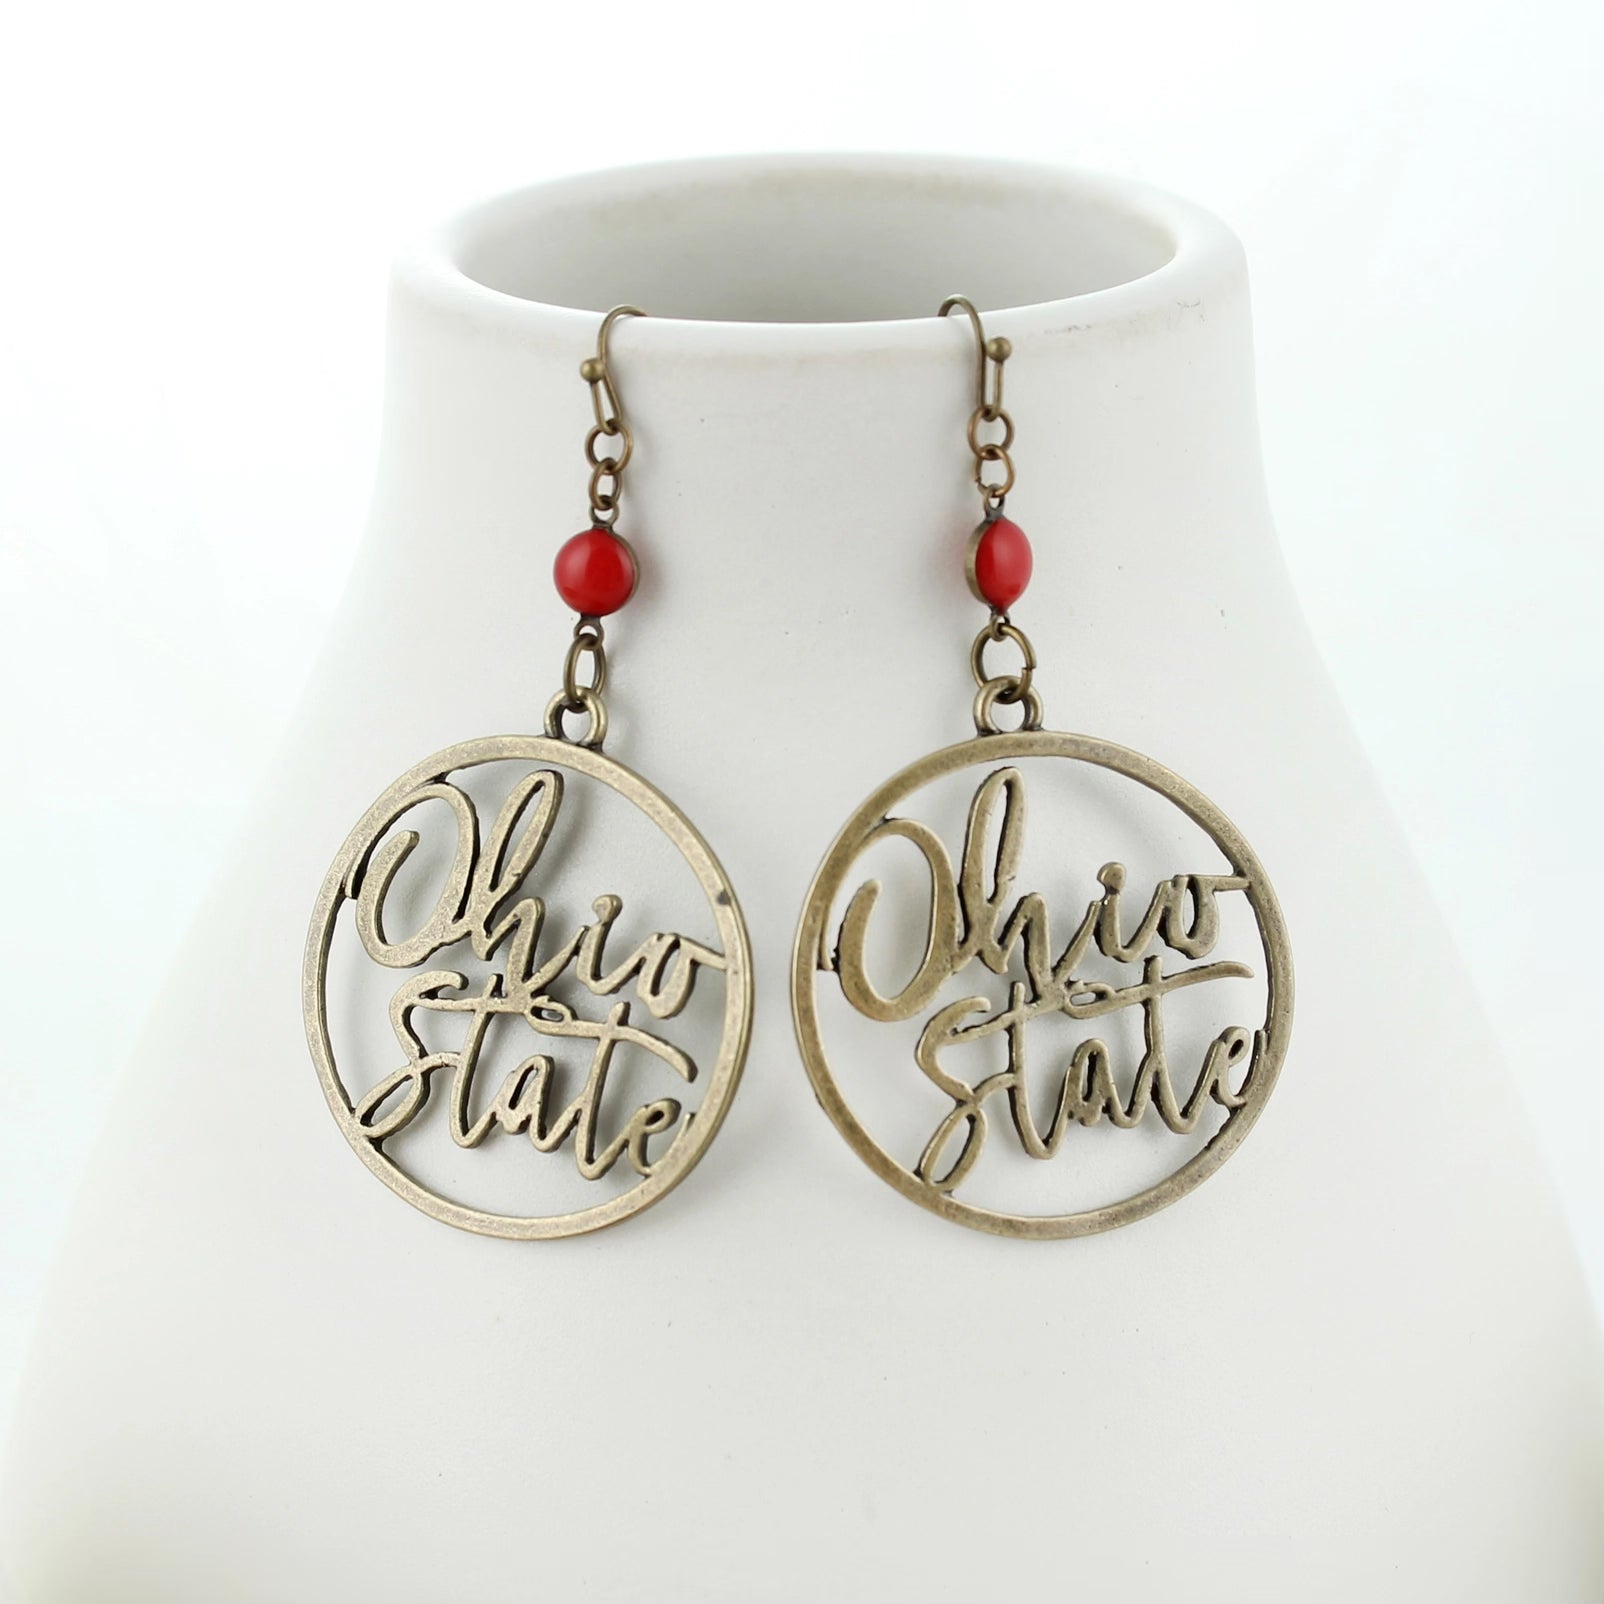 Circle Shepherd hook earrings featuring the slogan “Ohio State